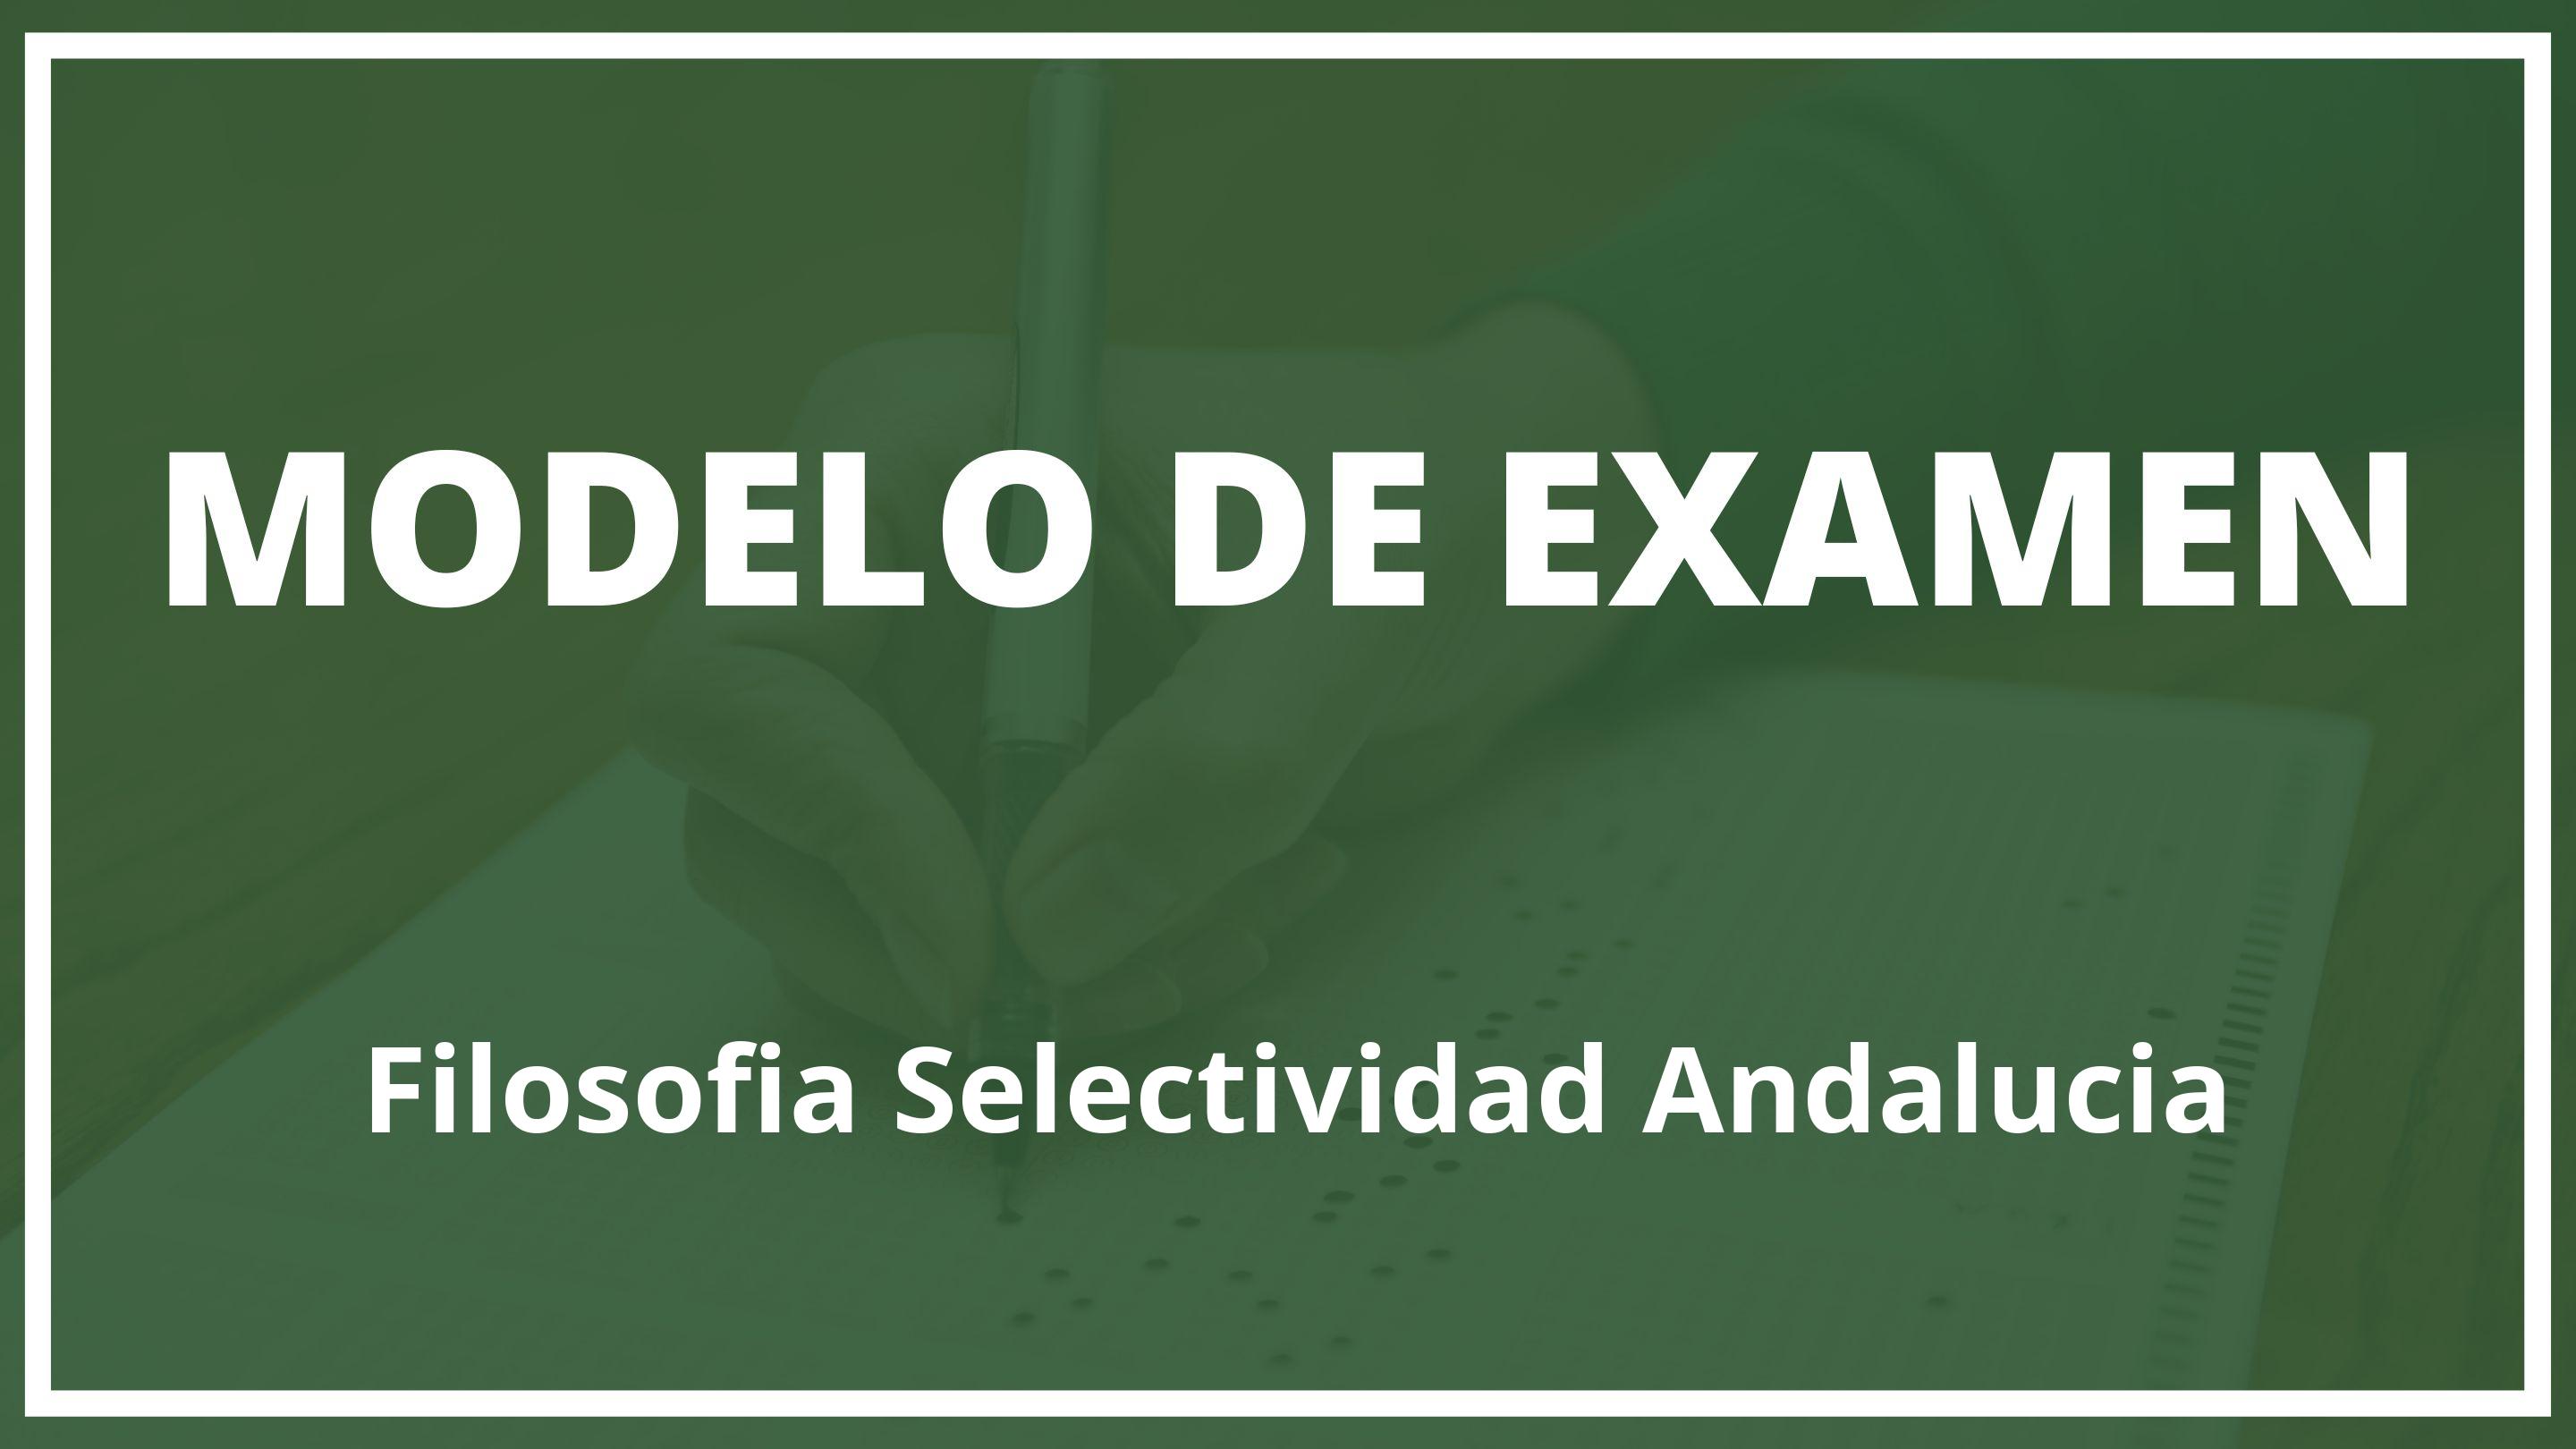 Examen Filosofia Selectividad Andalucia